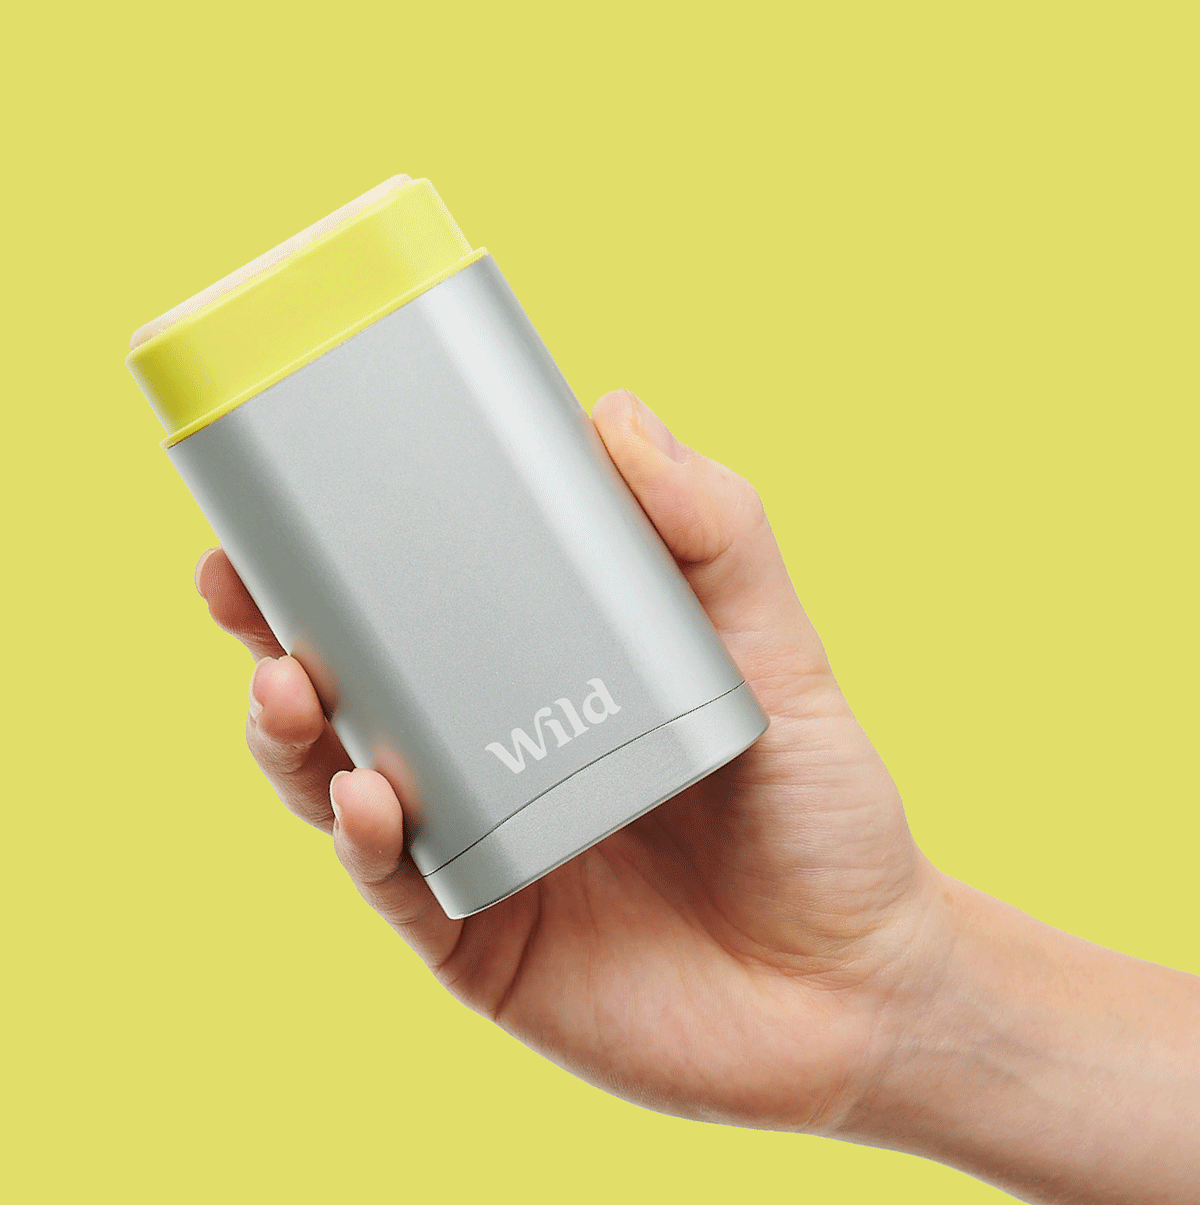 Morrama Designs Fully Sustainable Refillable Deodorant 'Wild